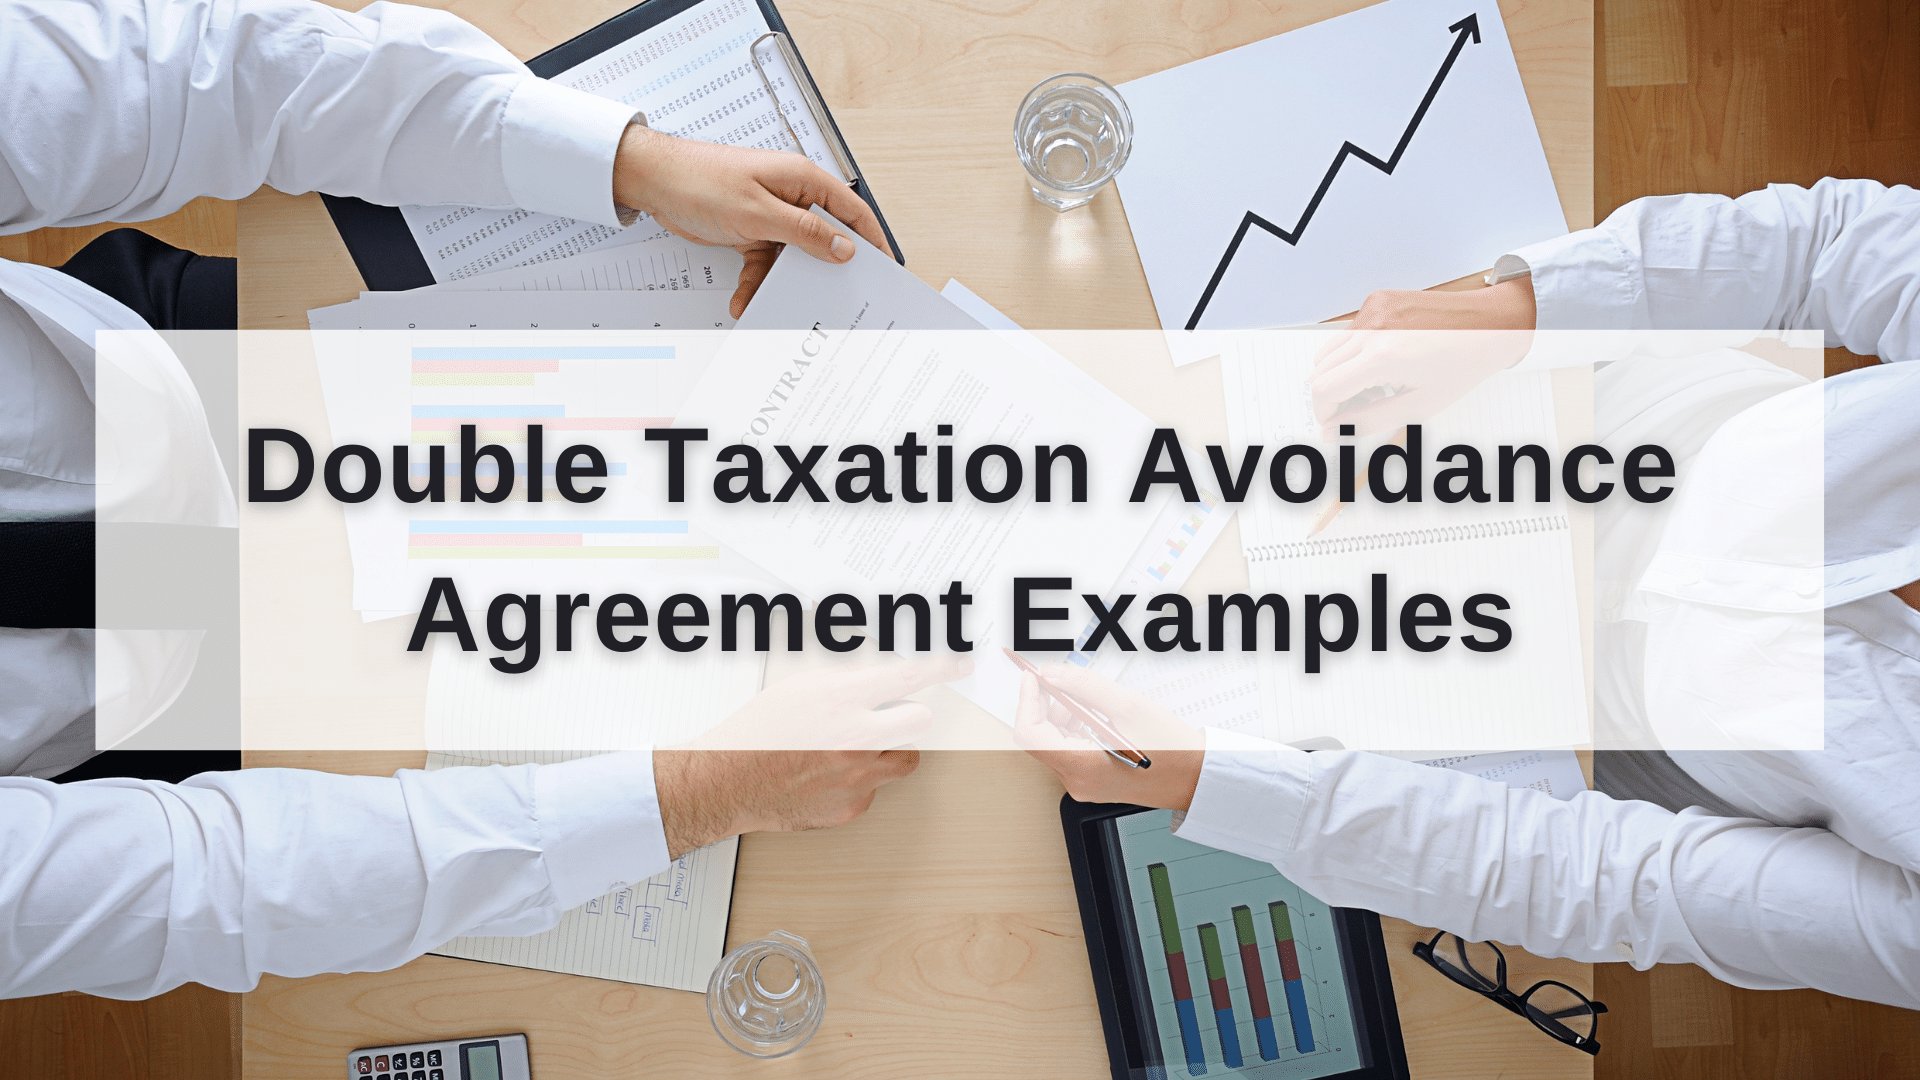 Double Taxation Avoidance Agreement Examples